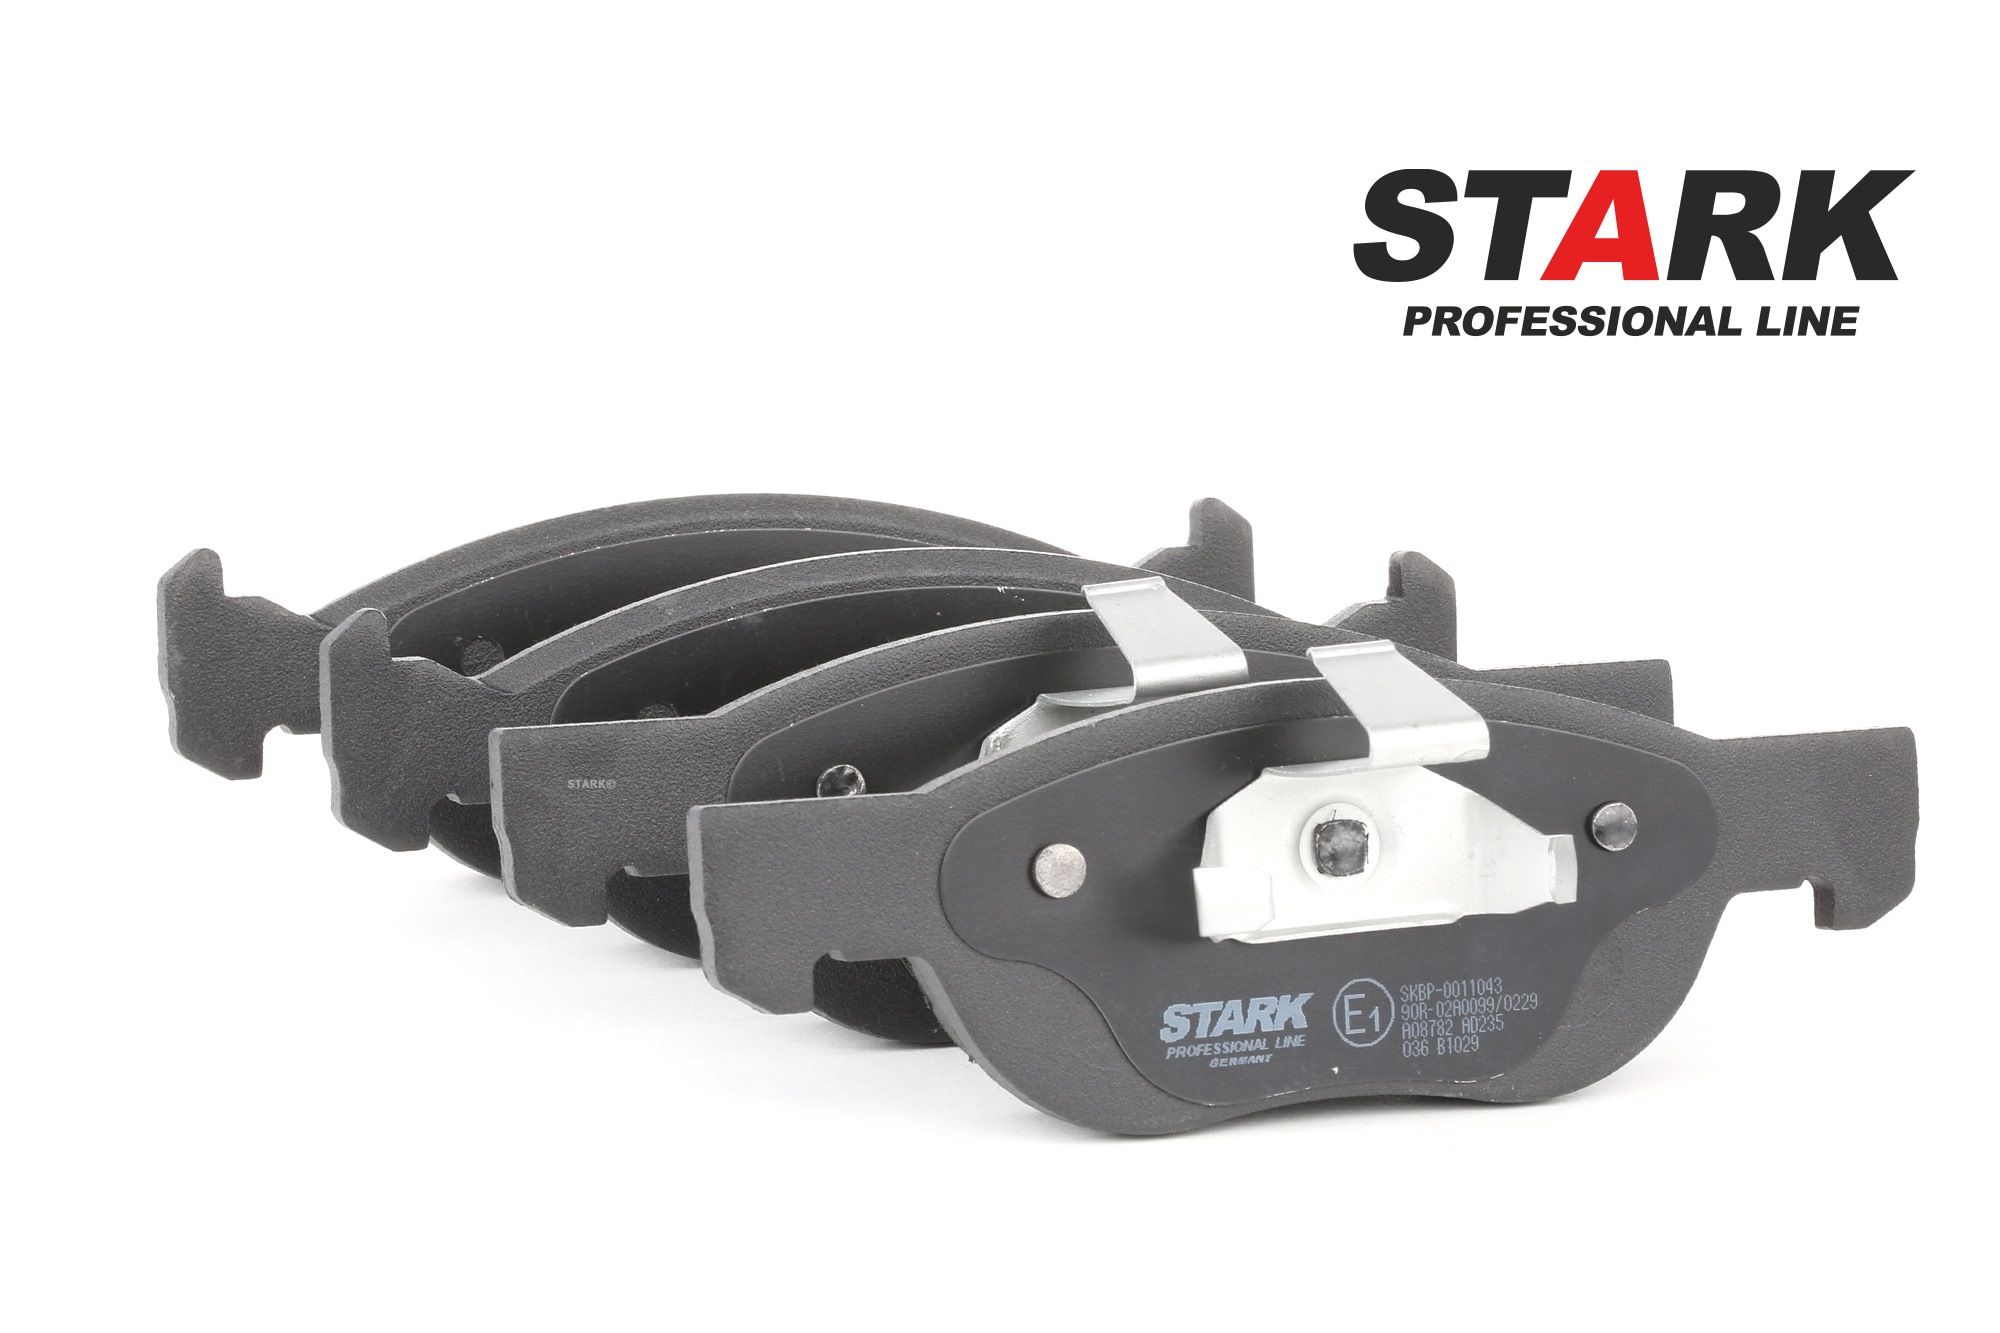 STARK Bremsbelagsatz SKBP-0011043